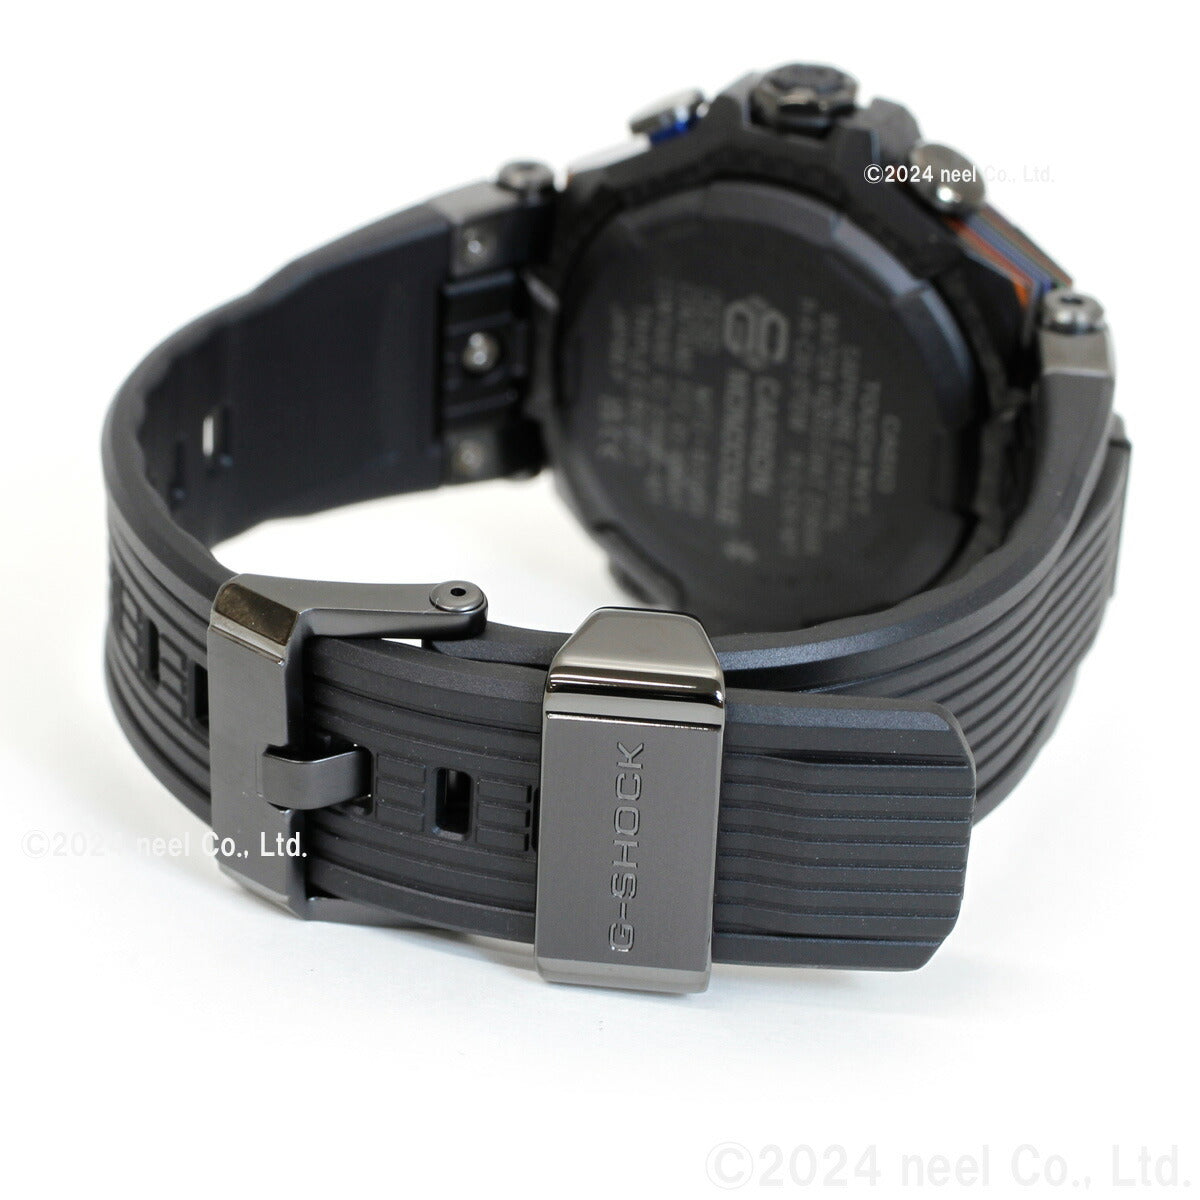 MT-G G-SHOCK 電波 ソーラー 電波時計 カシオ Gショック CASIO 限定モデル 腕時計 メンズ スマートフォンリンク タフソーラー MTG-B2000YR-1AJR